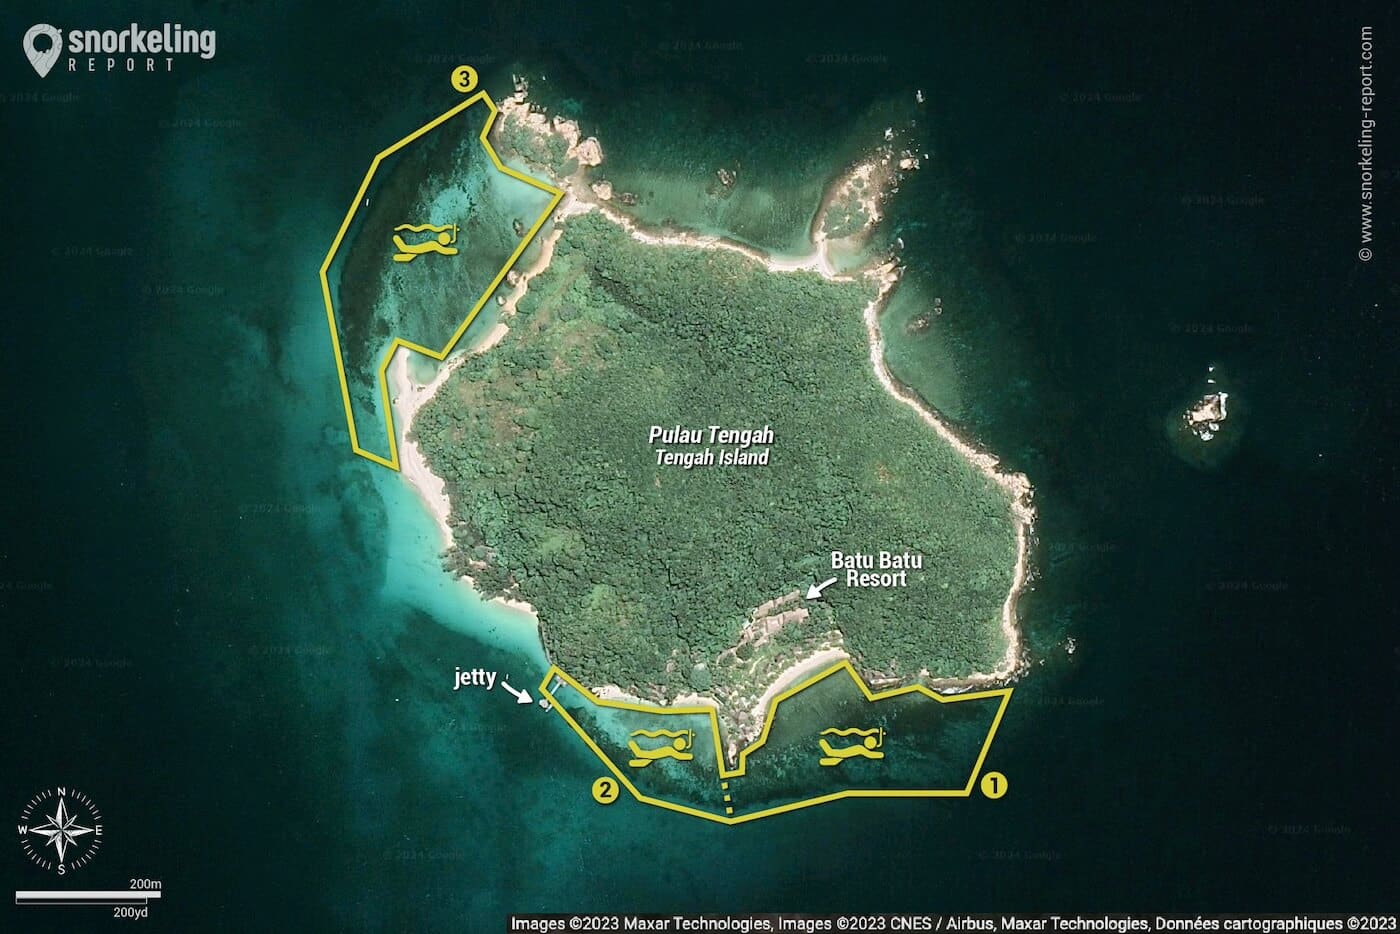 Batu Batu Resort - Pulau Tengah snorkeling map